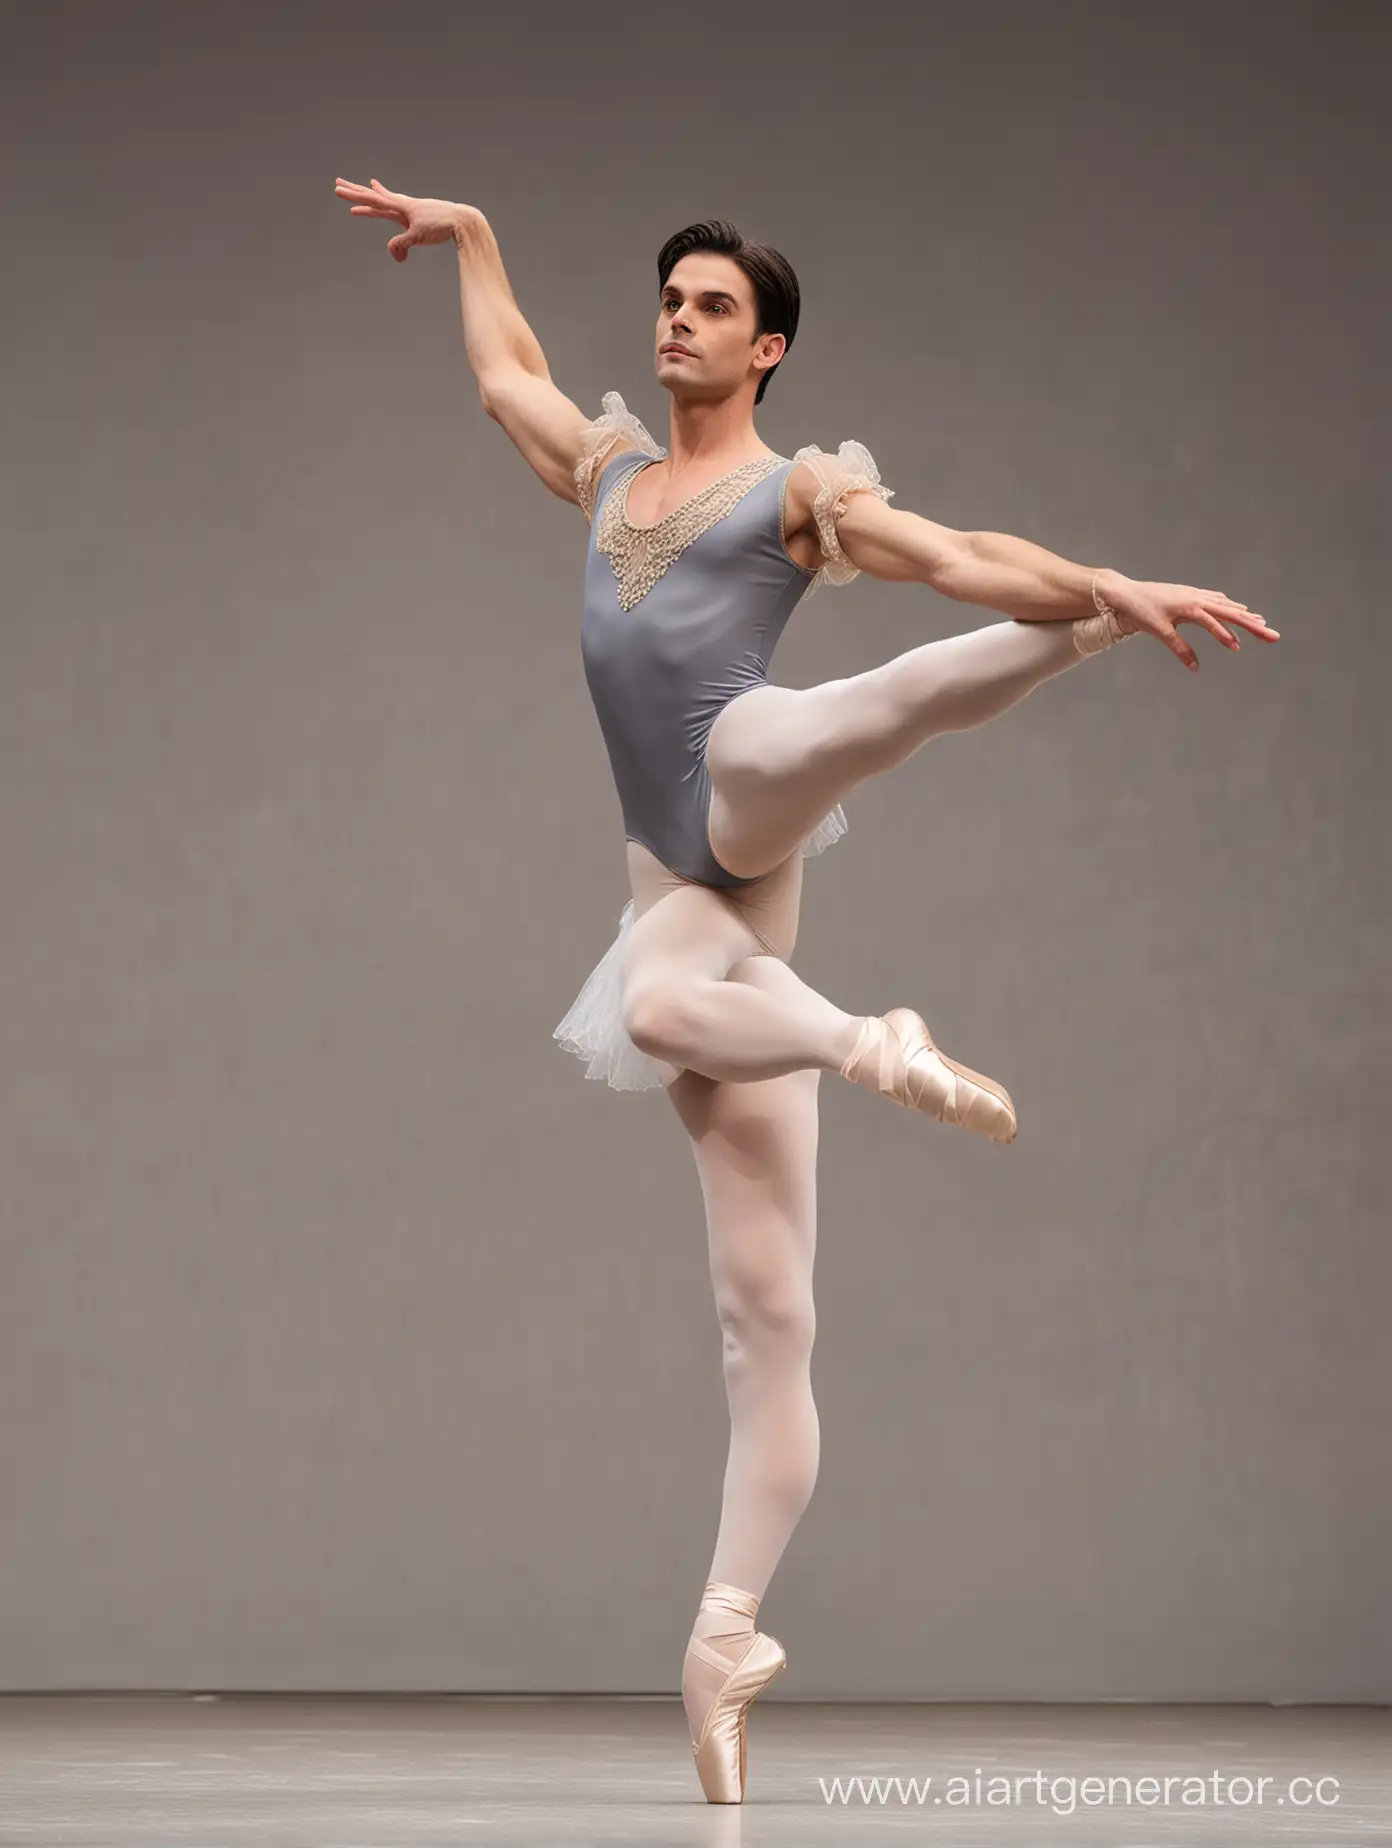 DarkHaired-Cavalier-Ballet-Dancer-Performs-Graceful-Dance-on-Stage